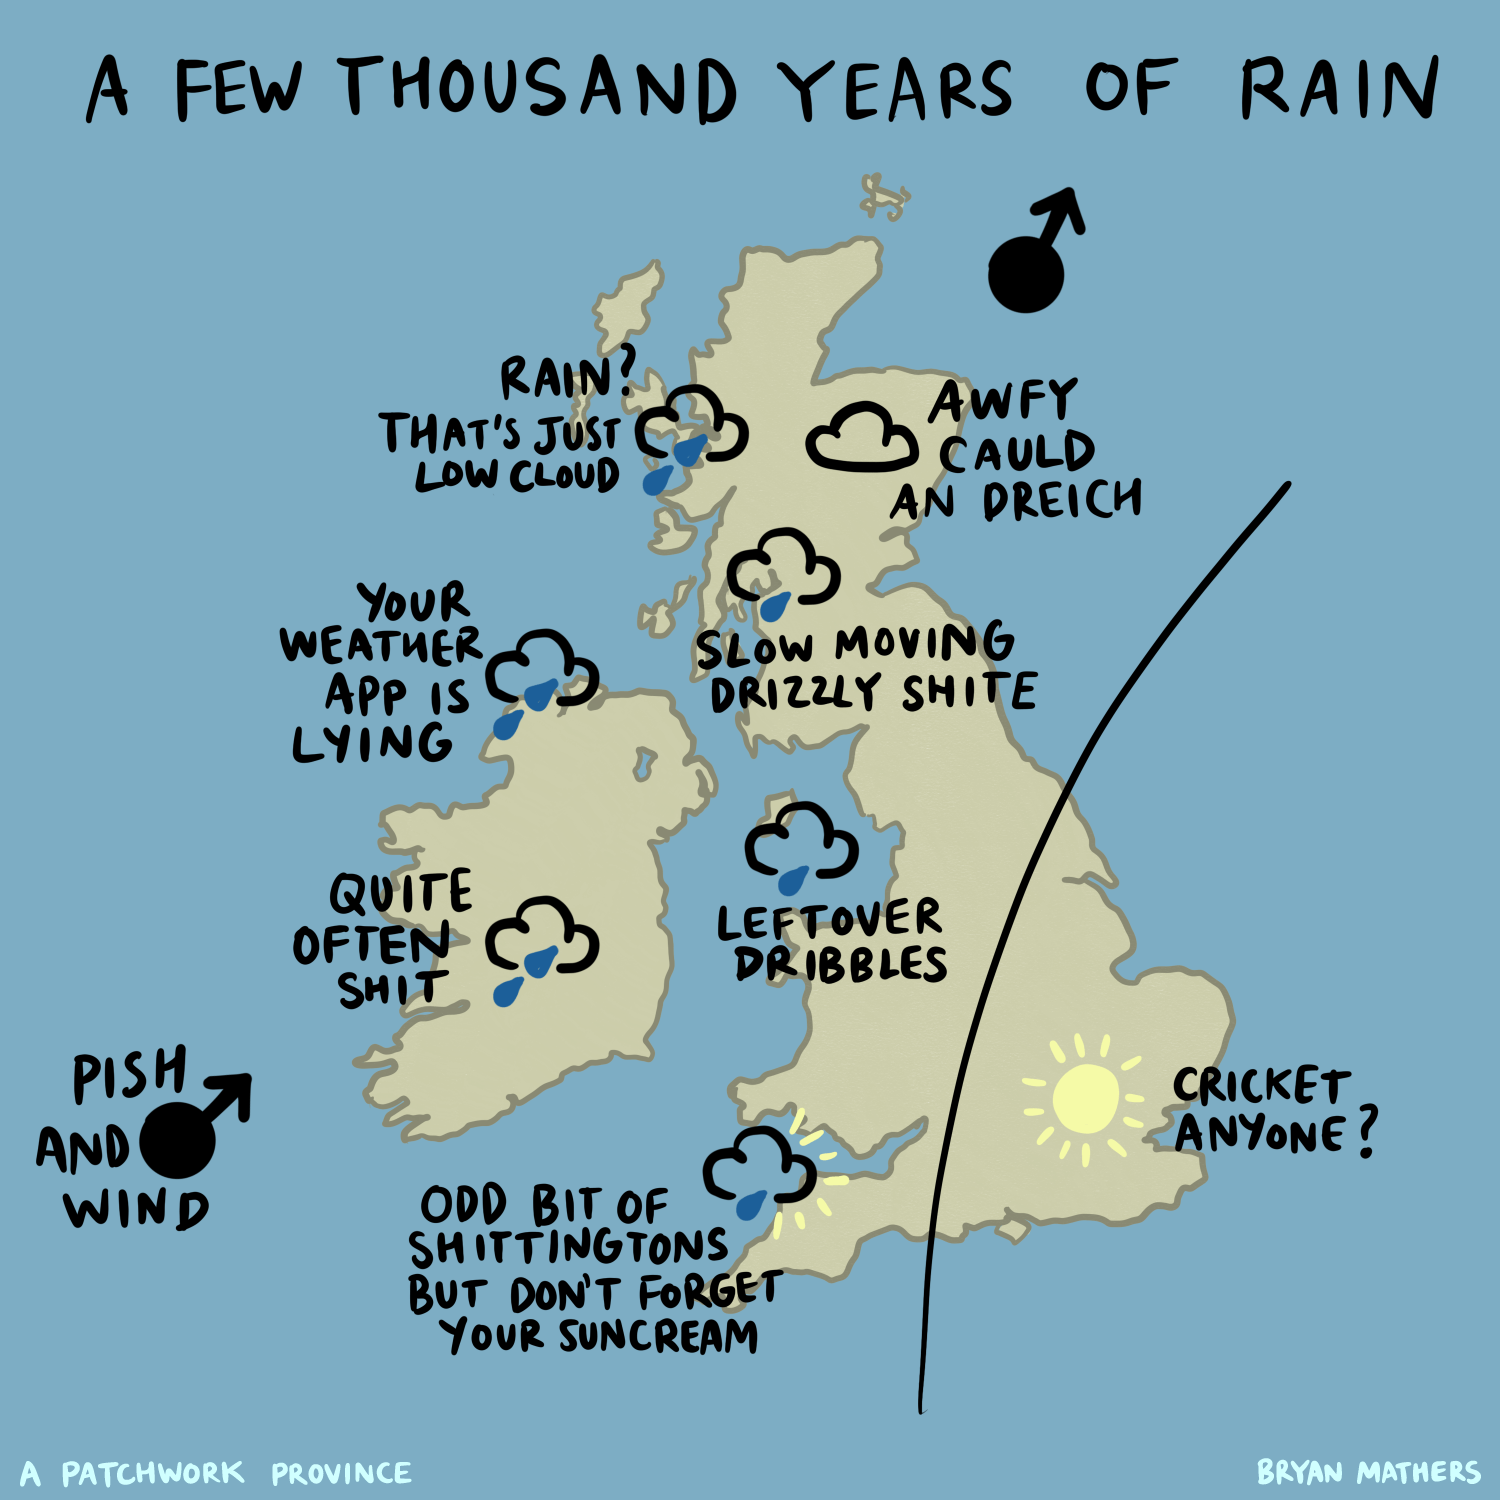 A few thousand years of rain